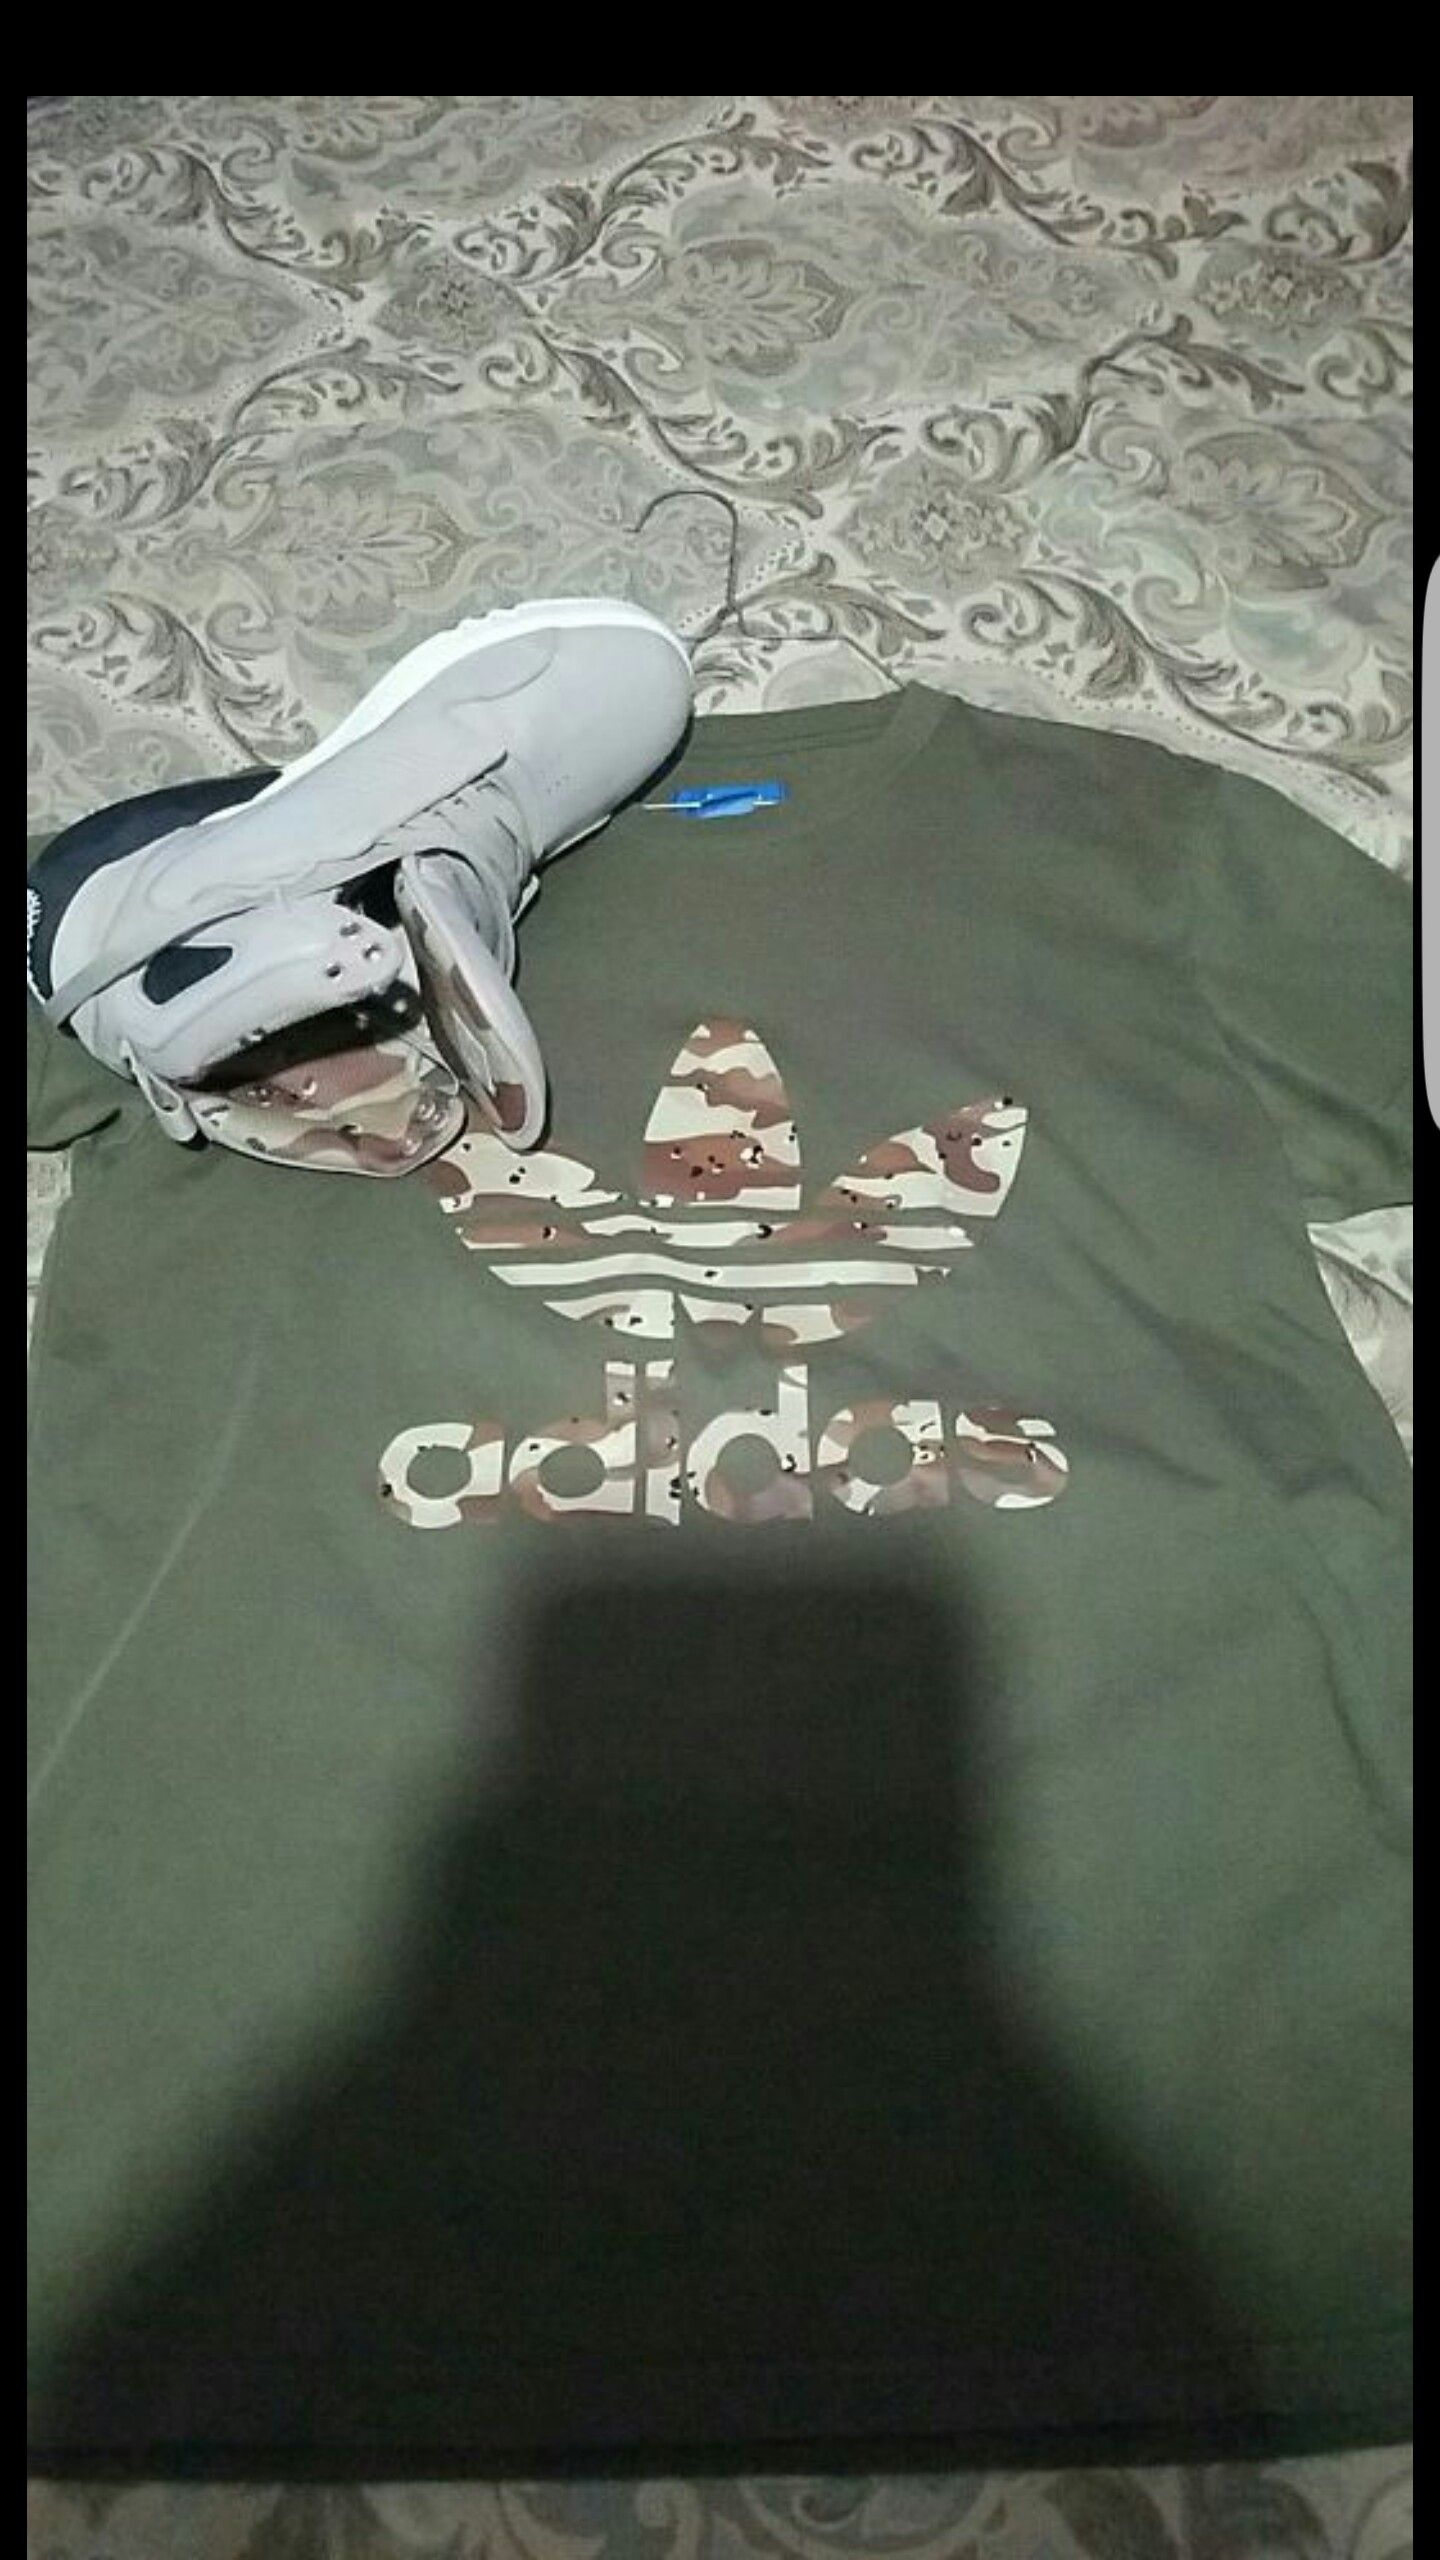 Adidas classic camo shoes and matching shirt